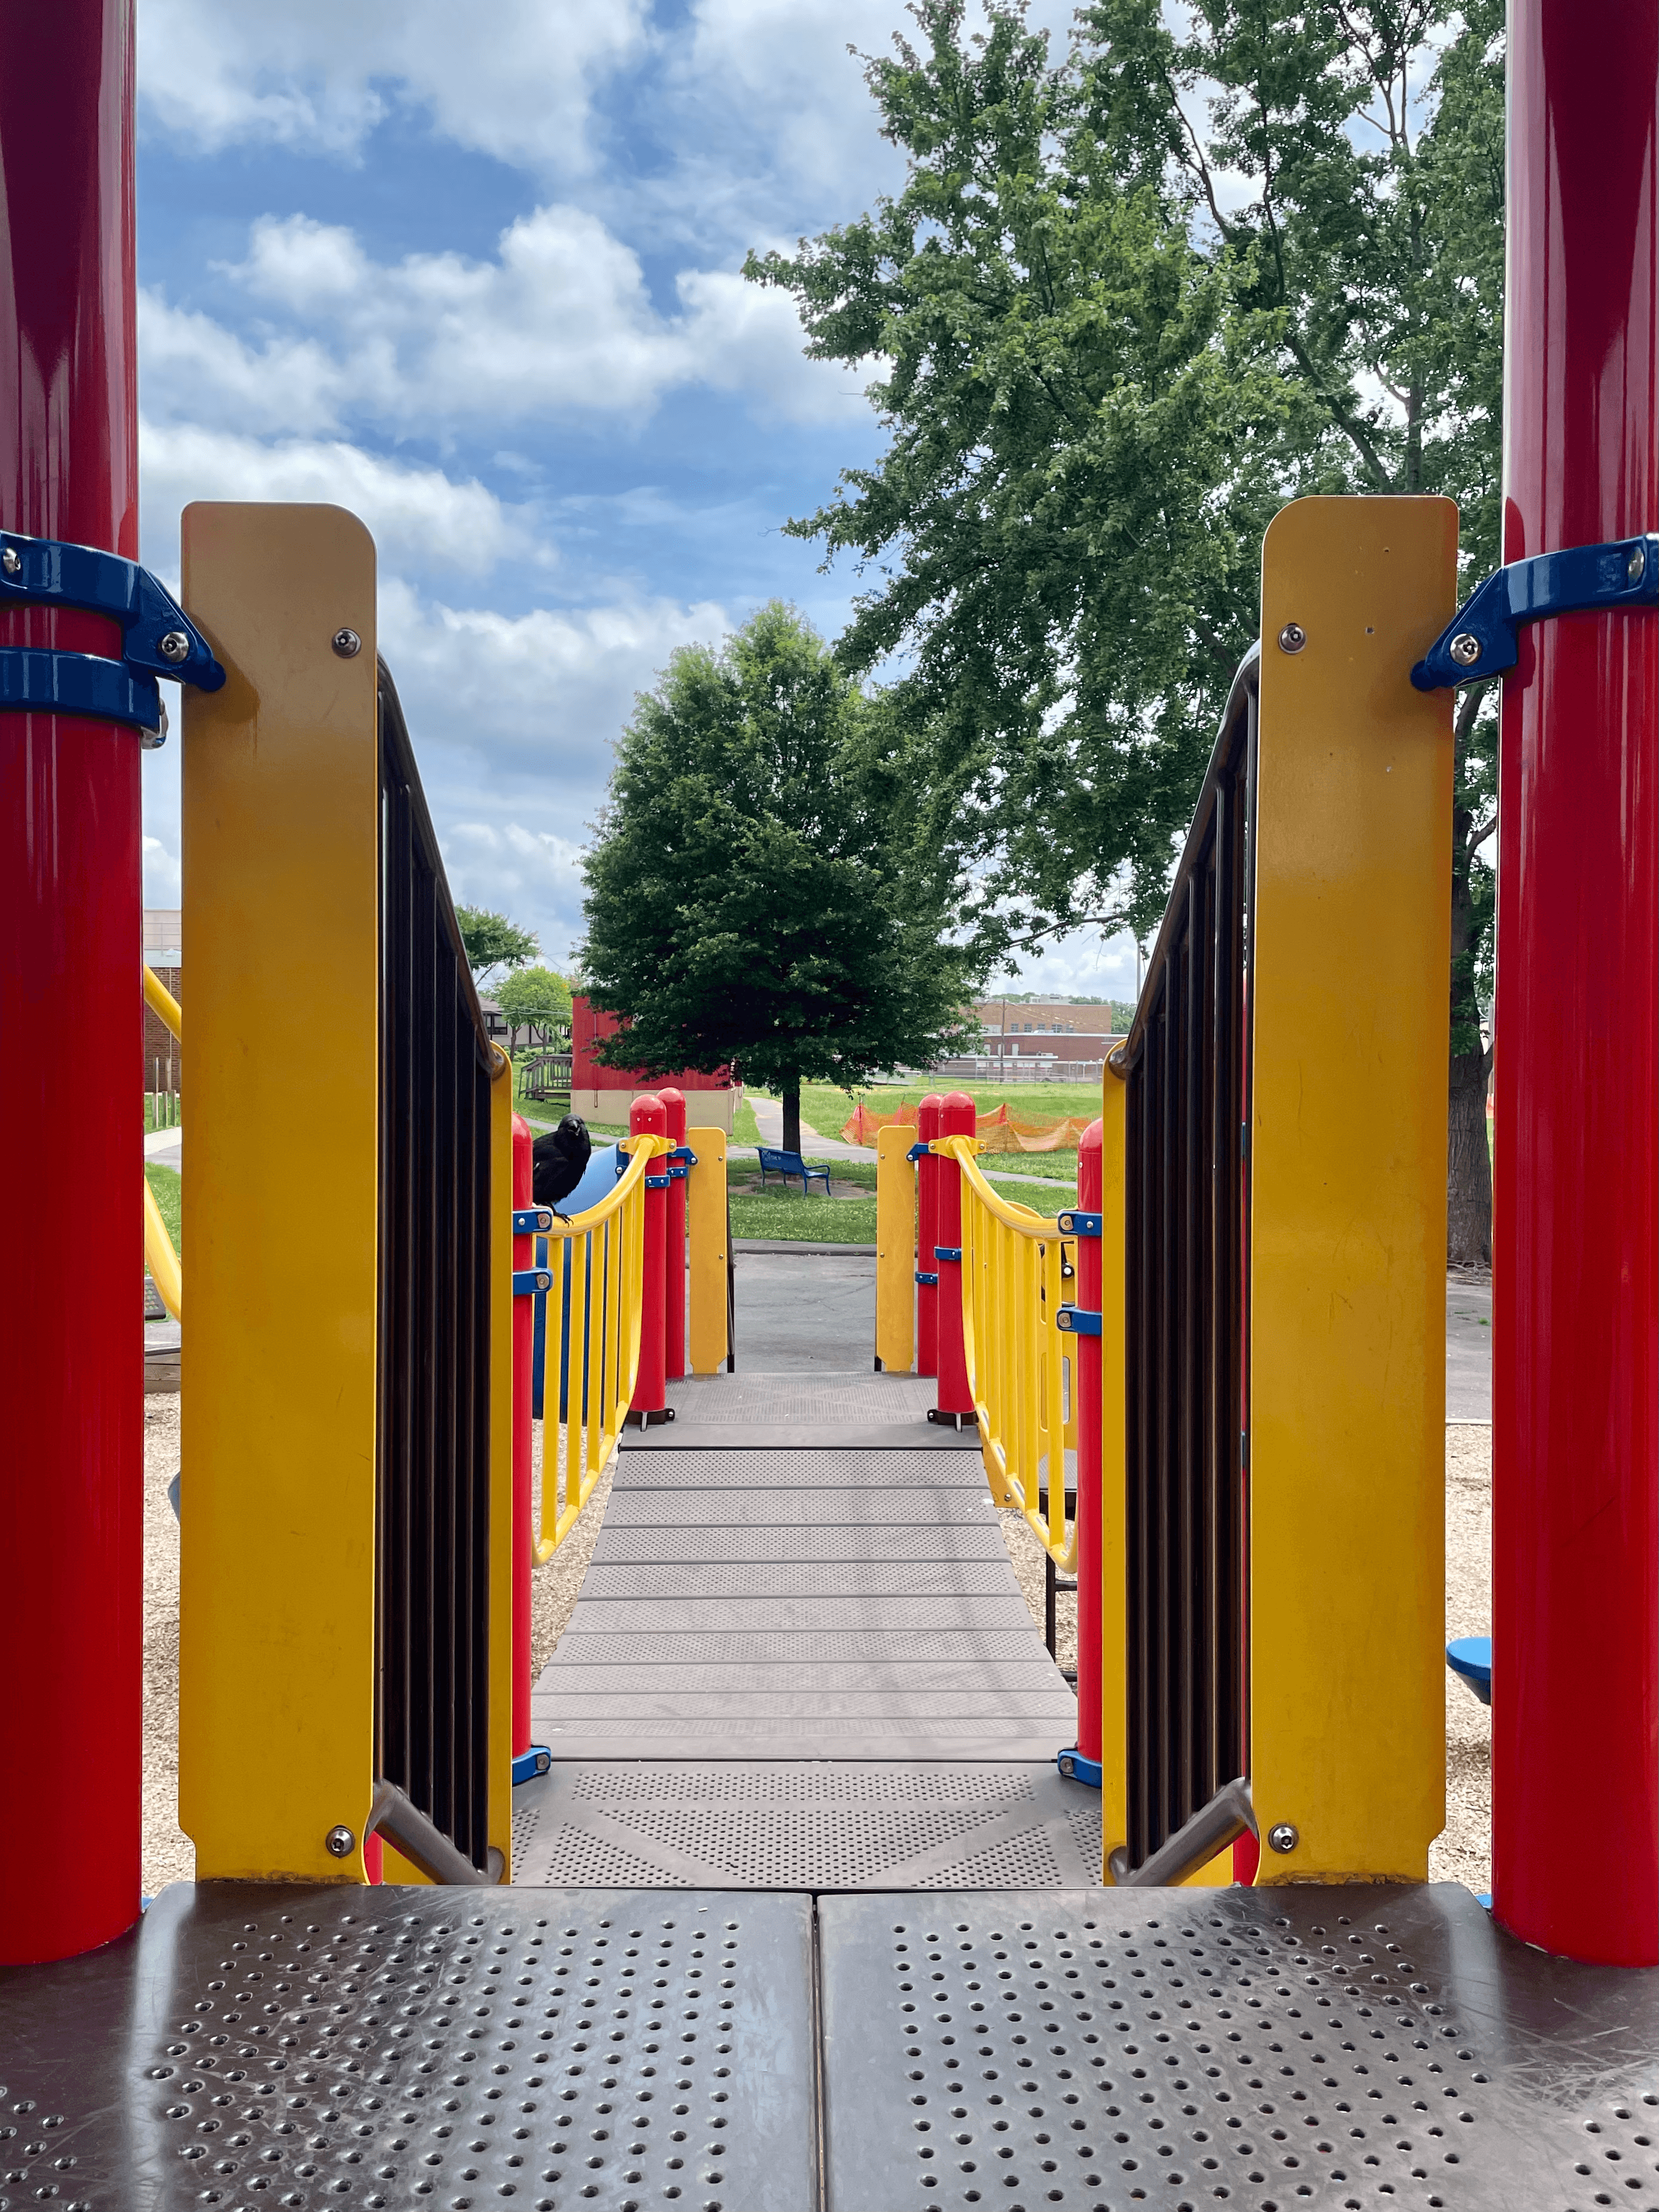 Bright playground evoking childhood memories